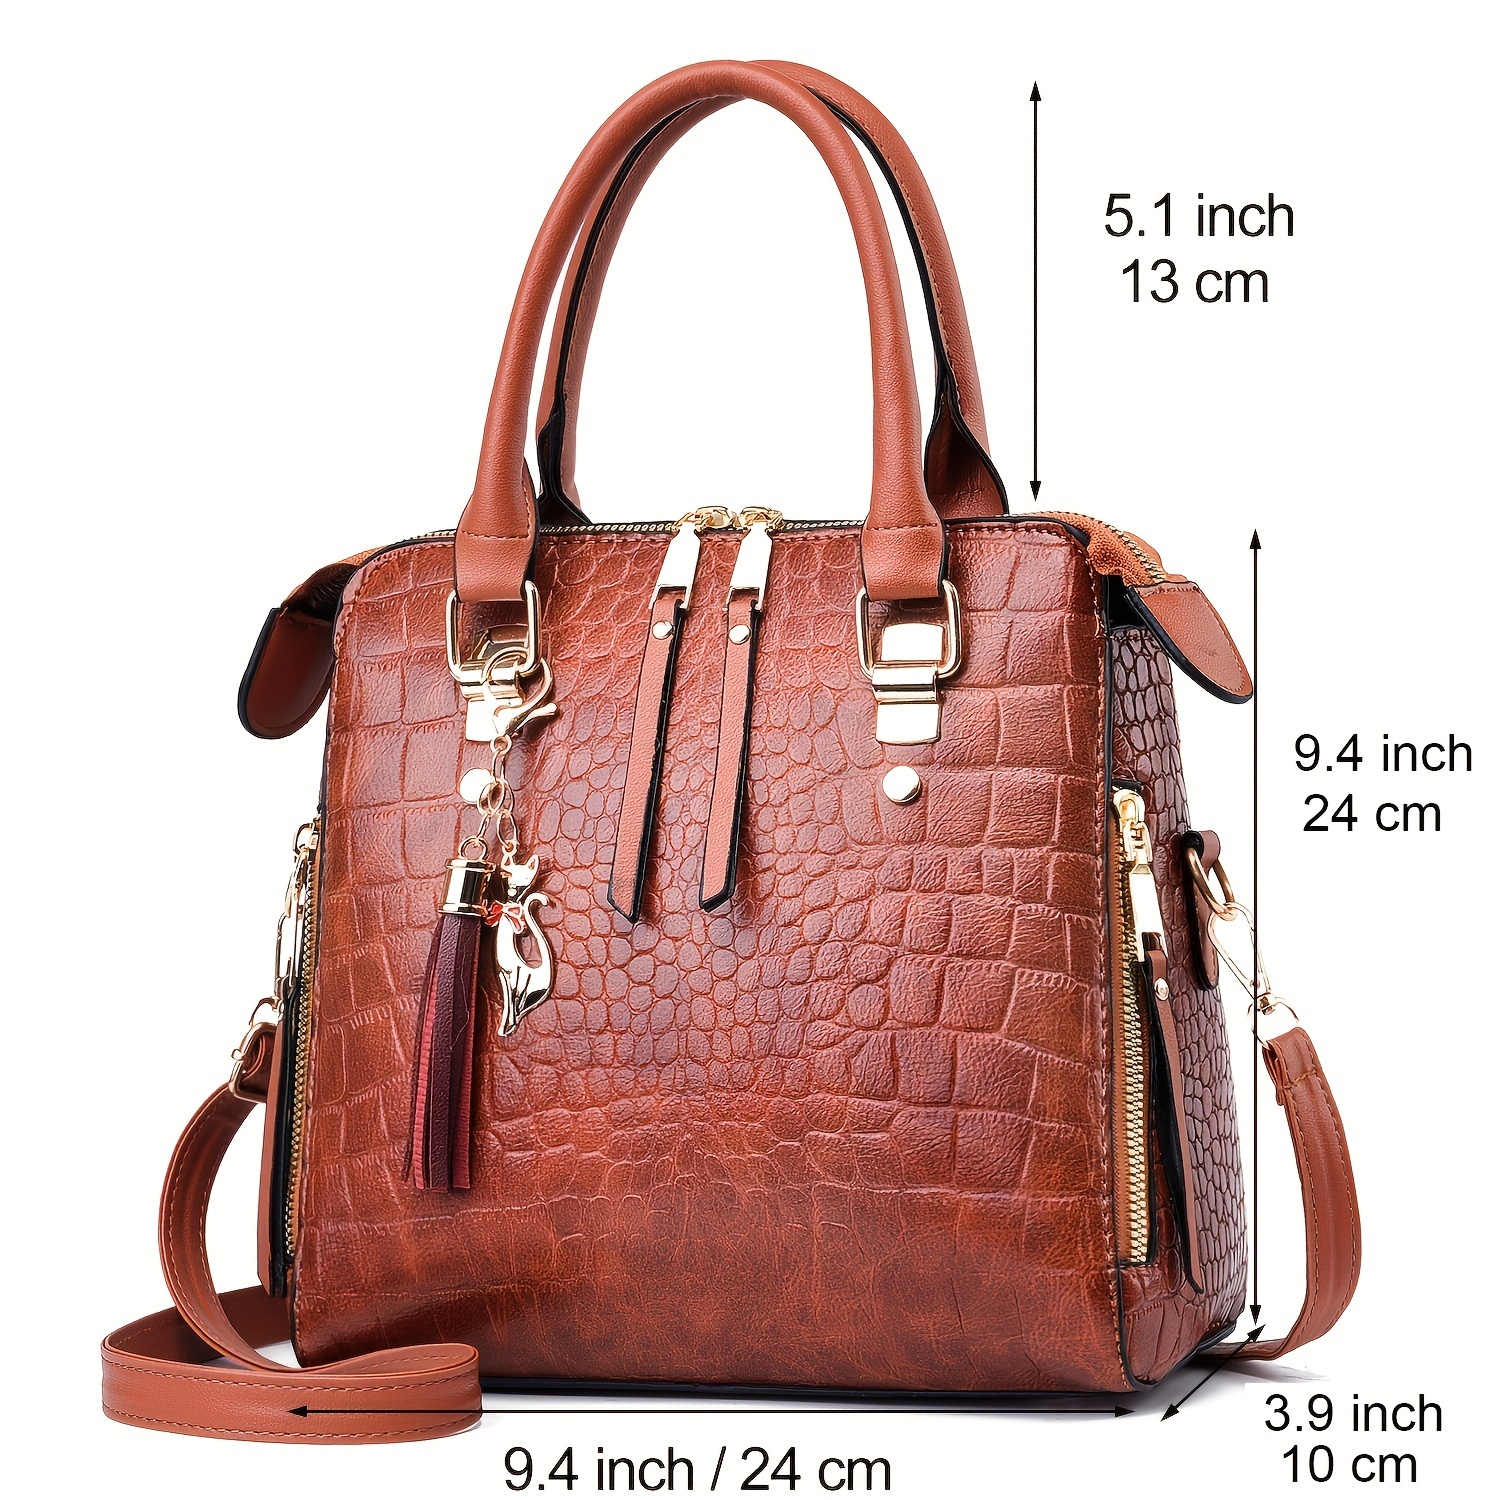 fashion crocodile pattern handbag luxury faux leather crossbody bag women satchel purse with tassel details 0